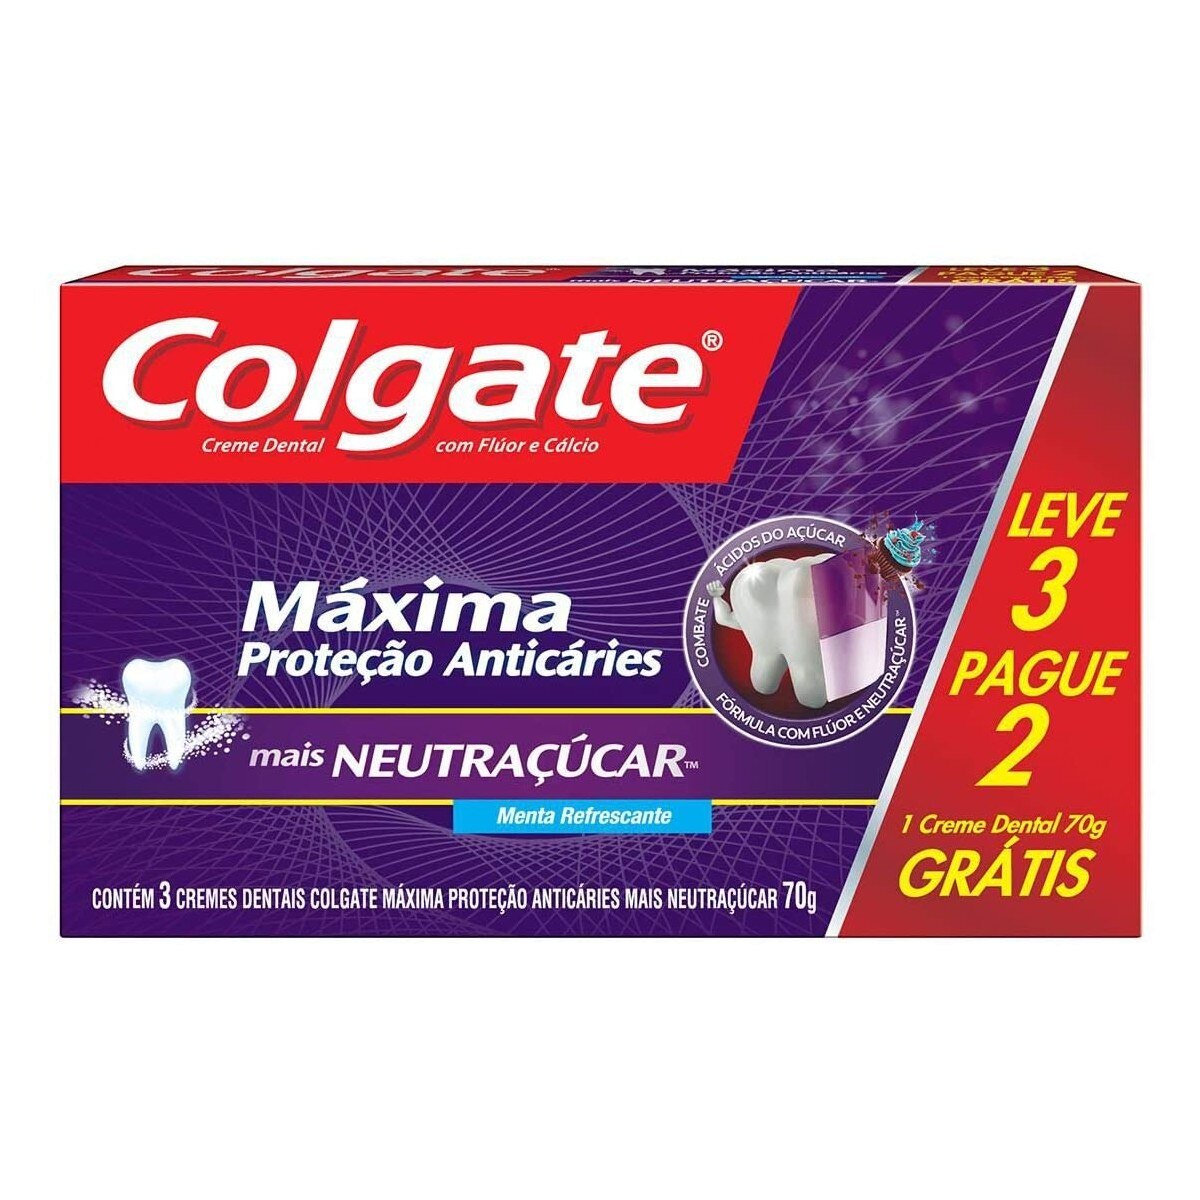 Creme Dental Colgate Maxima Protecao Anticaries + Neutracucar Leve 3 Pague 2 70g